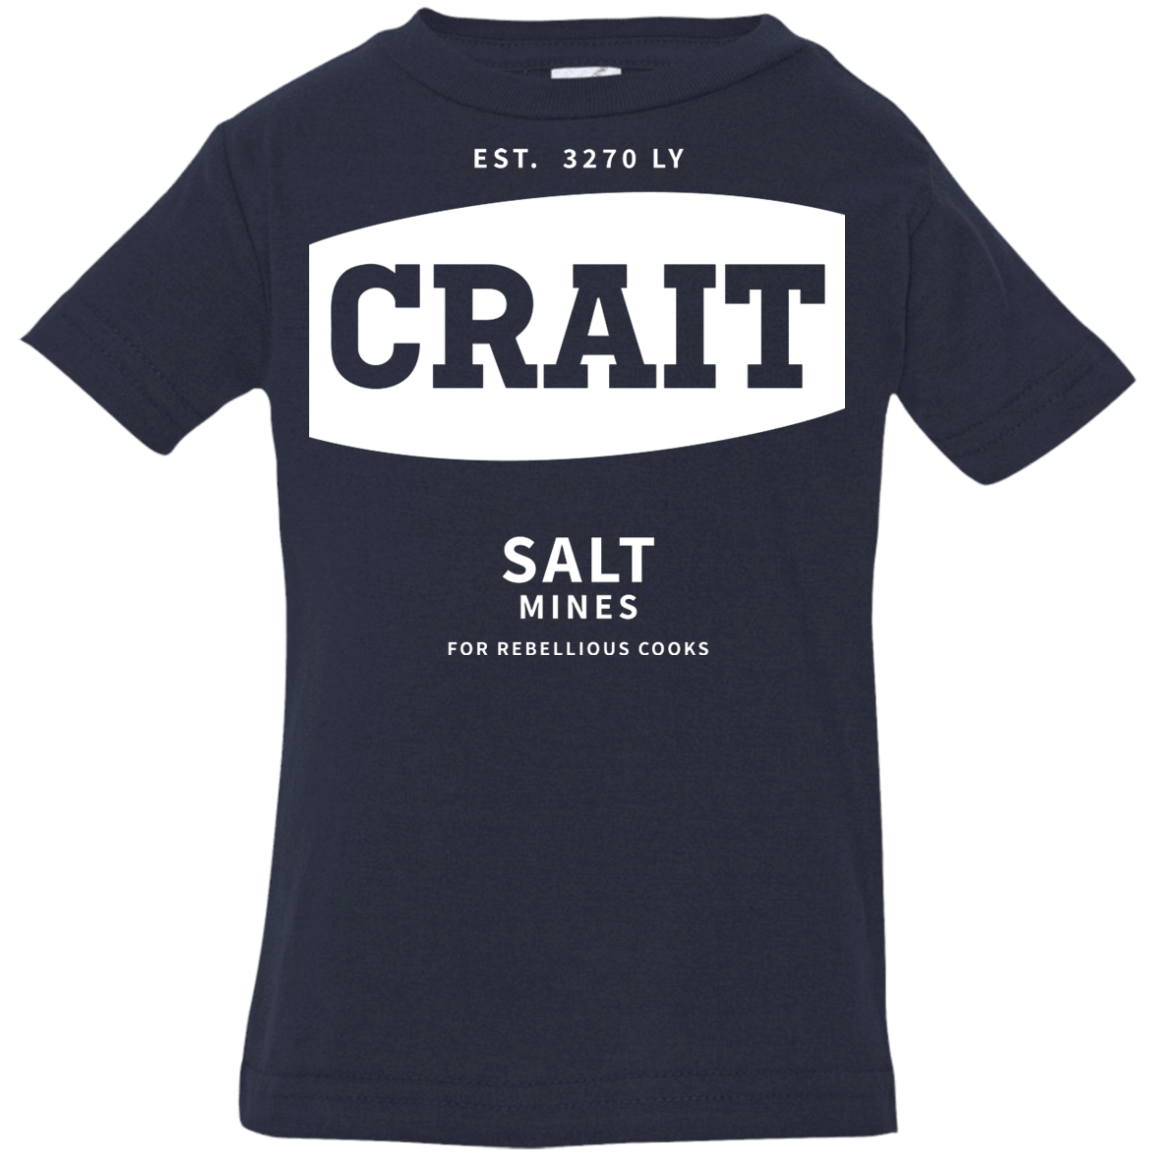 T-Shirts Navy / 6 Months Crait Saxa Salt Infant Premium T-Shirt